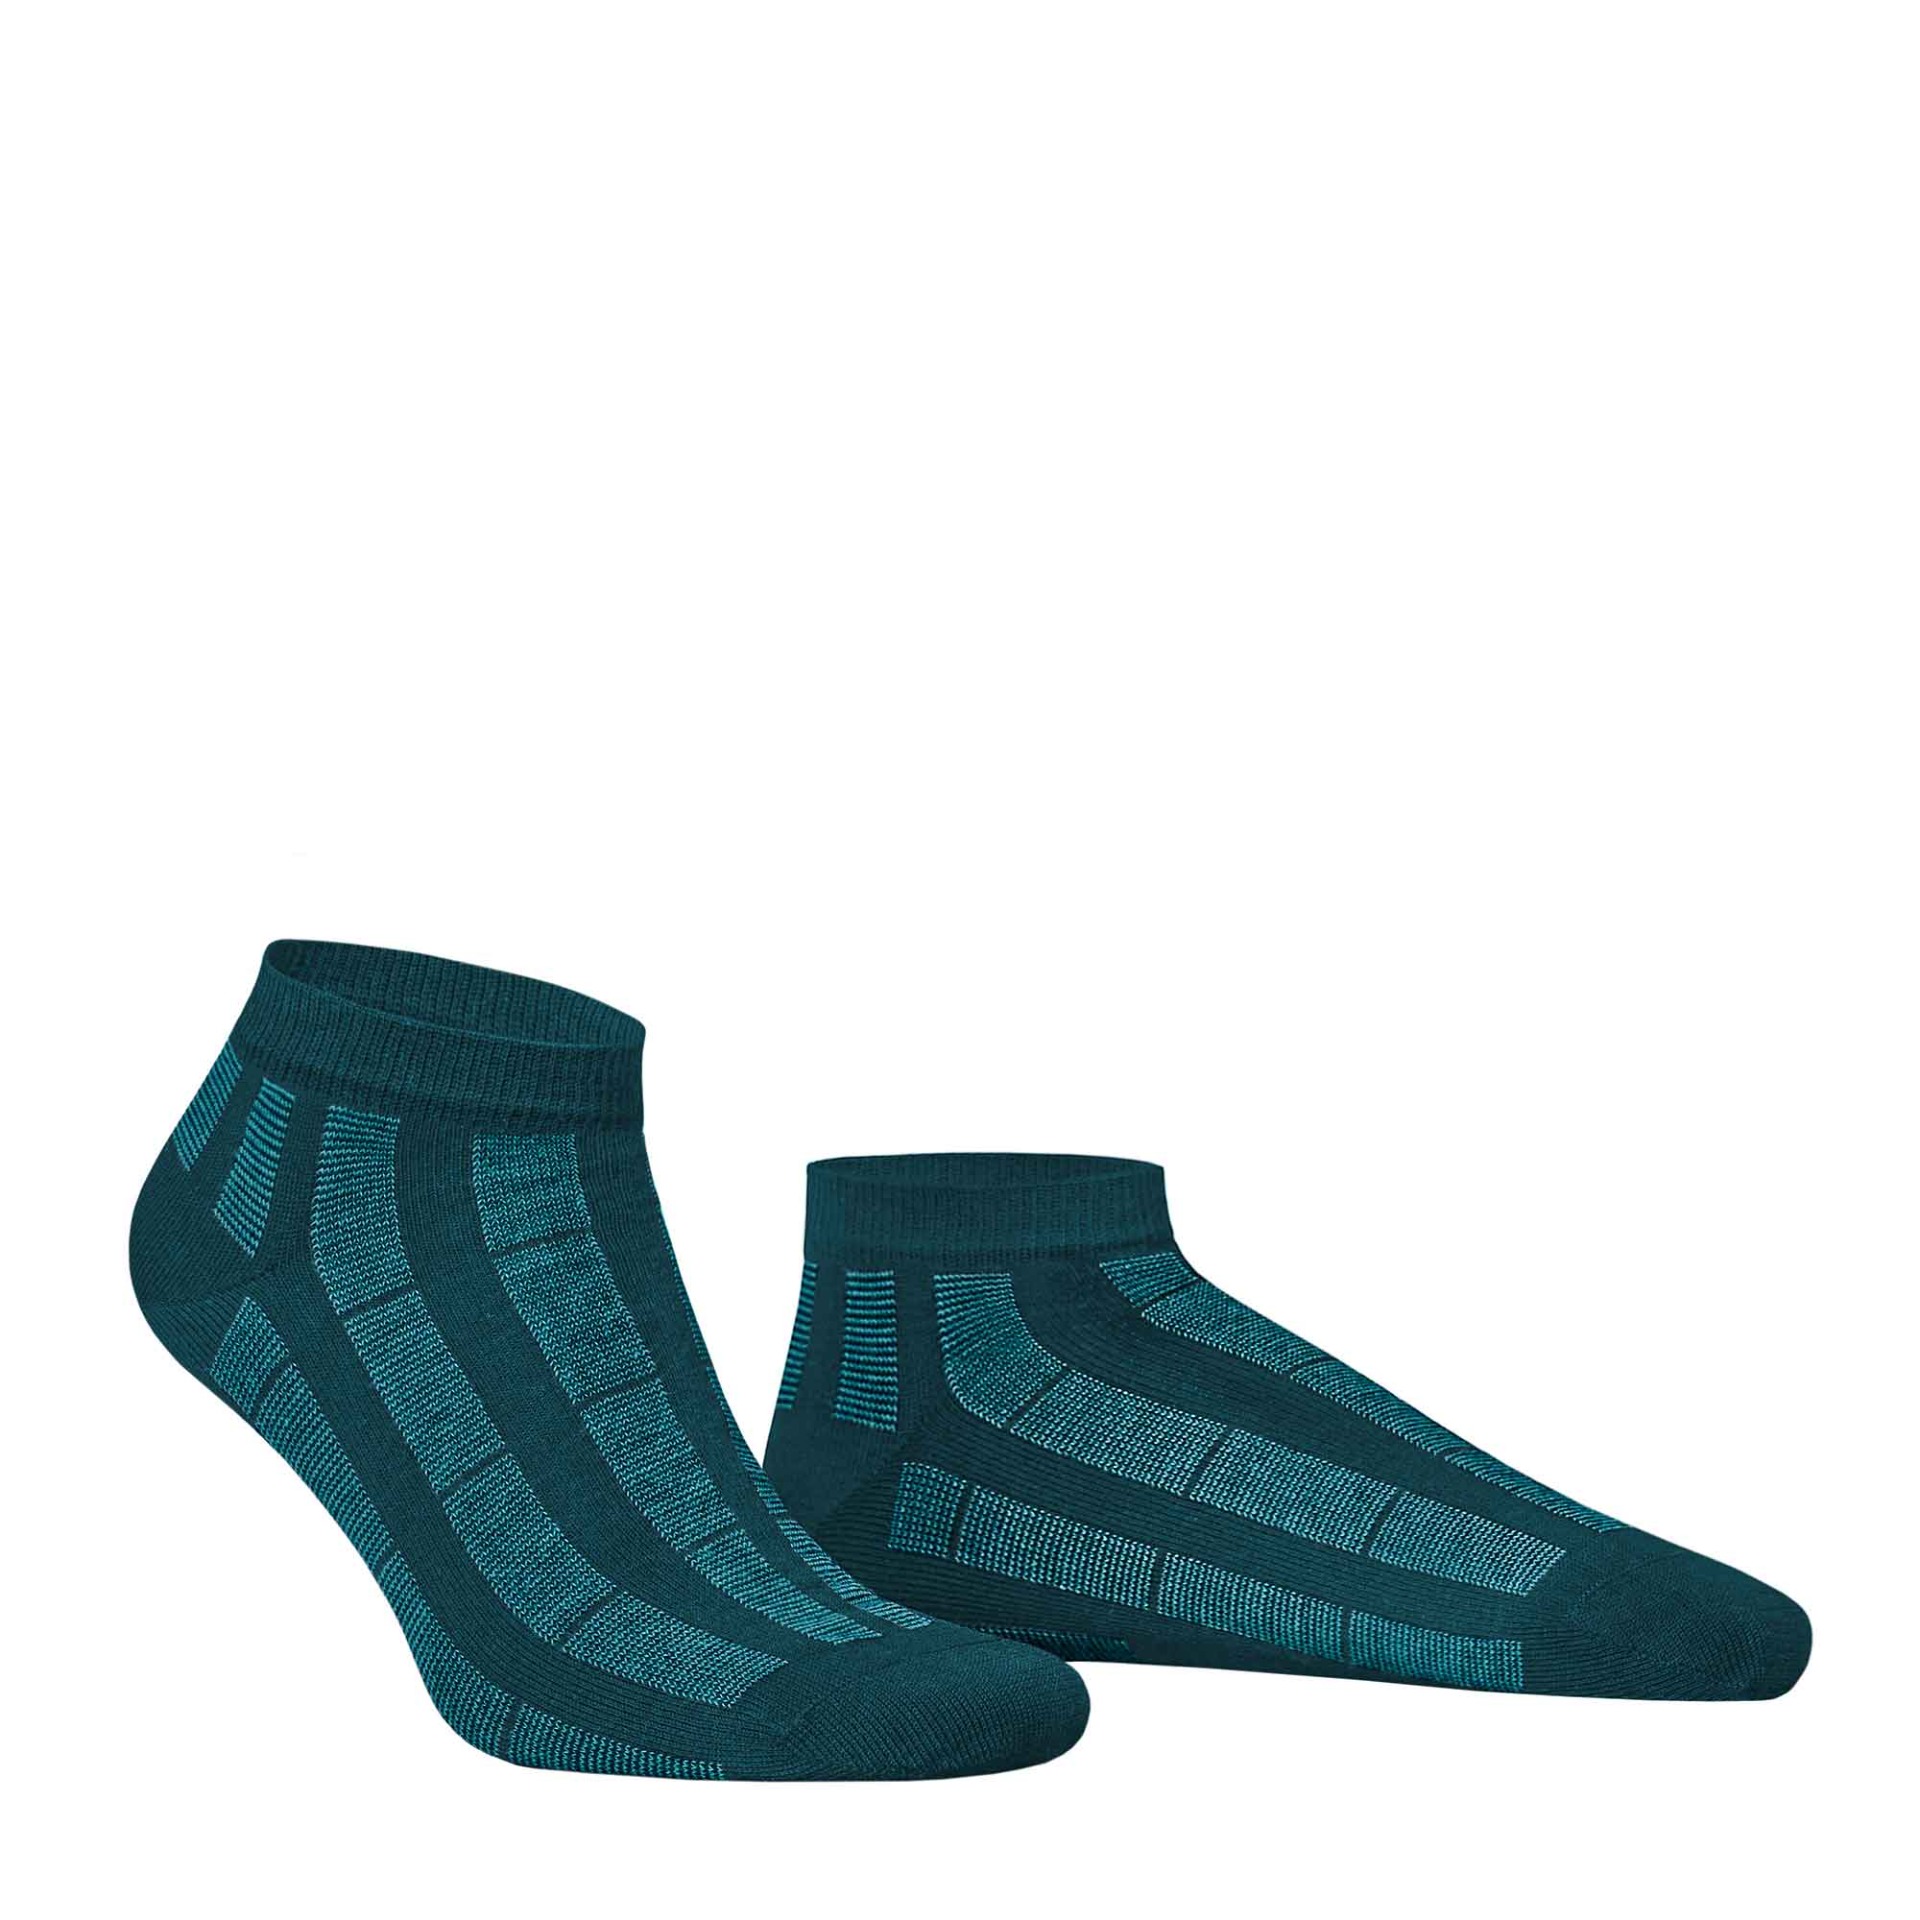 HUDSON Herren PIN -  39/42 - Sneaker Socken mit Streifen-Muster - Capri blue 0111 (Blau)